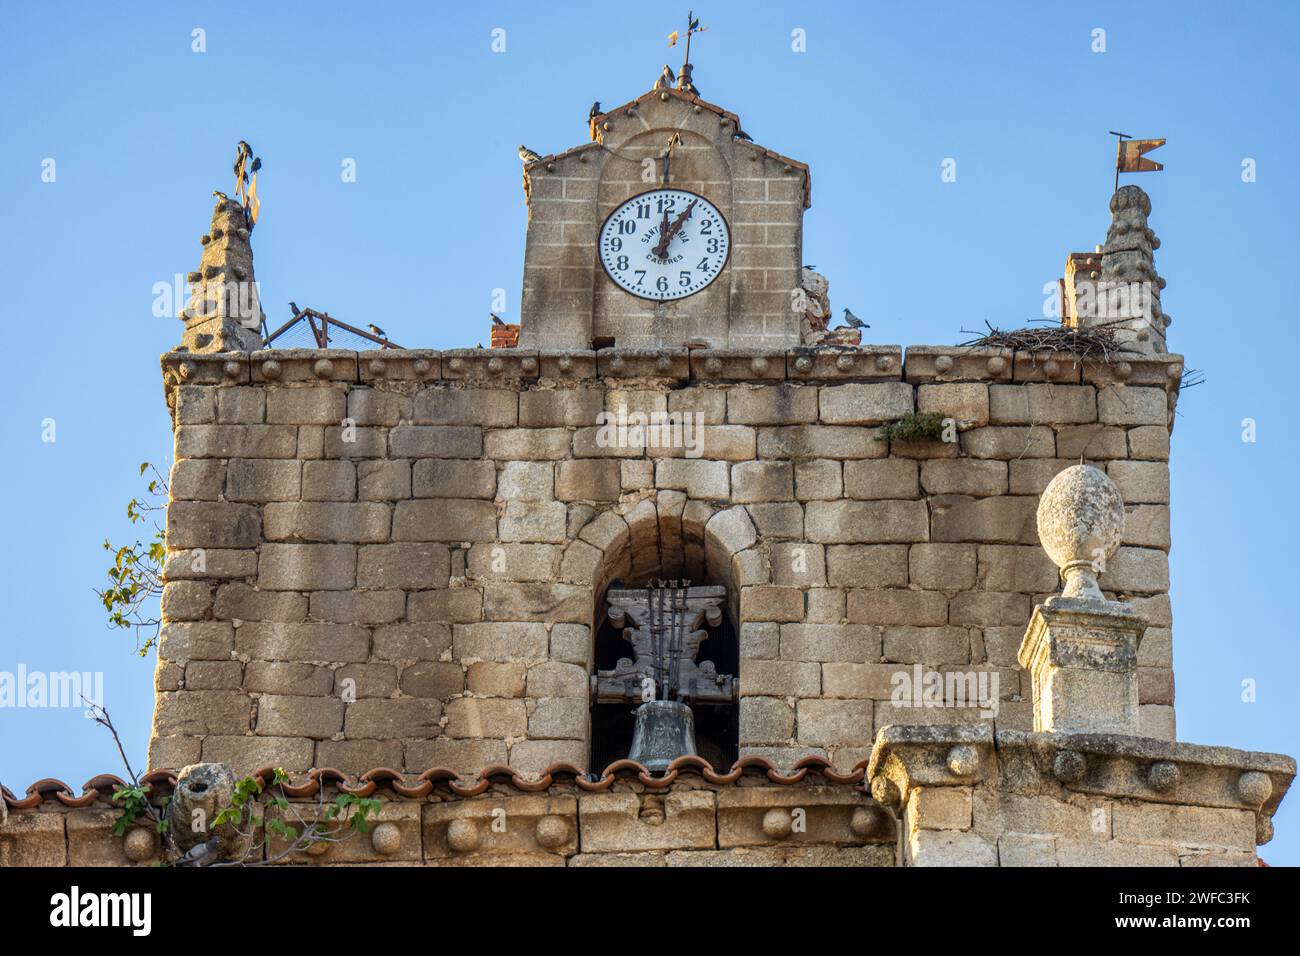 Detalle de la torre de la iglesia de Santa Marina en Cañaveral, Cáceres, España Stockfoto